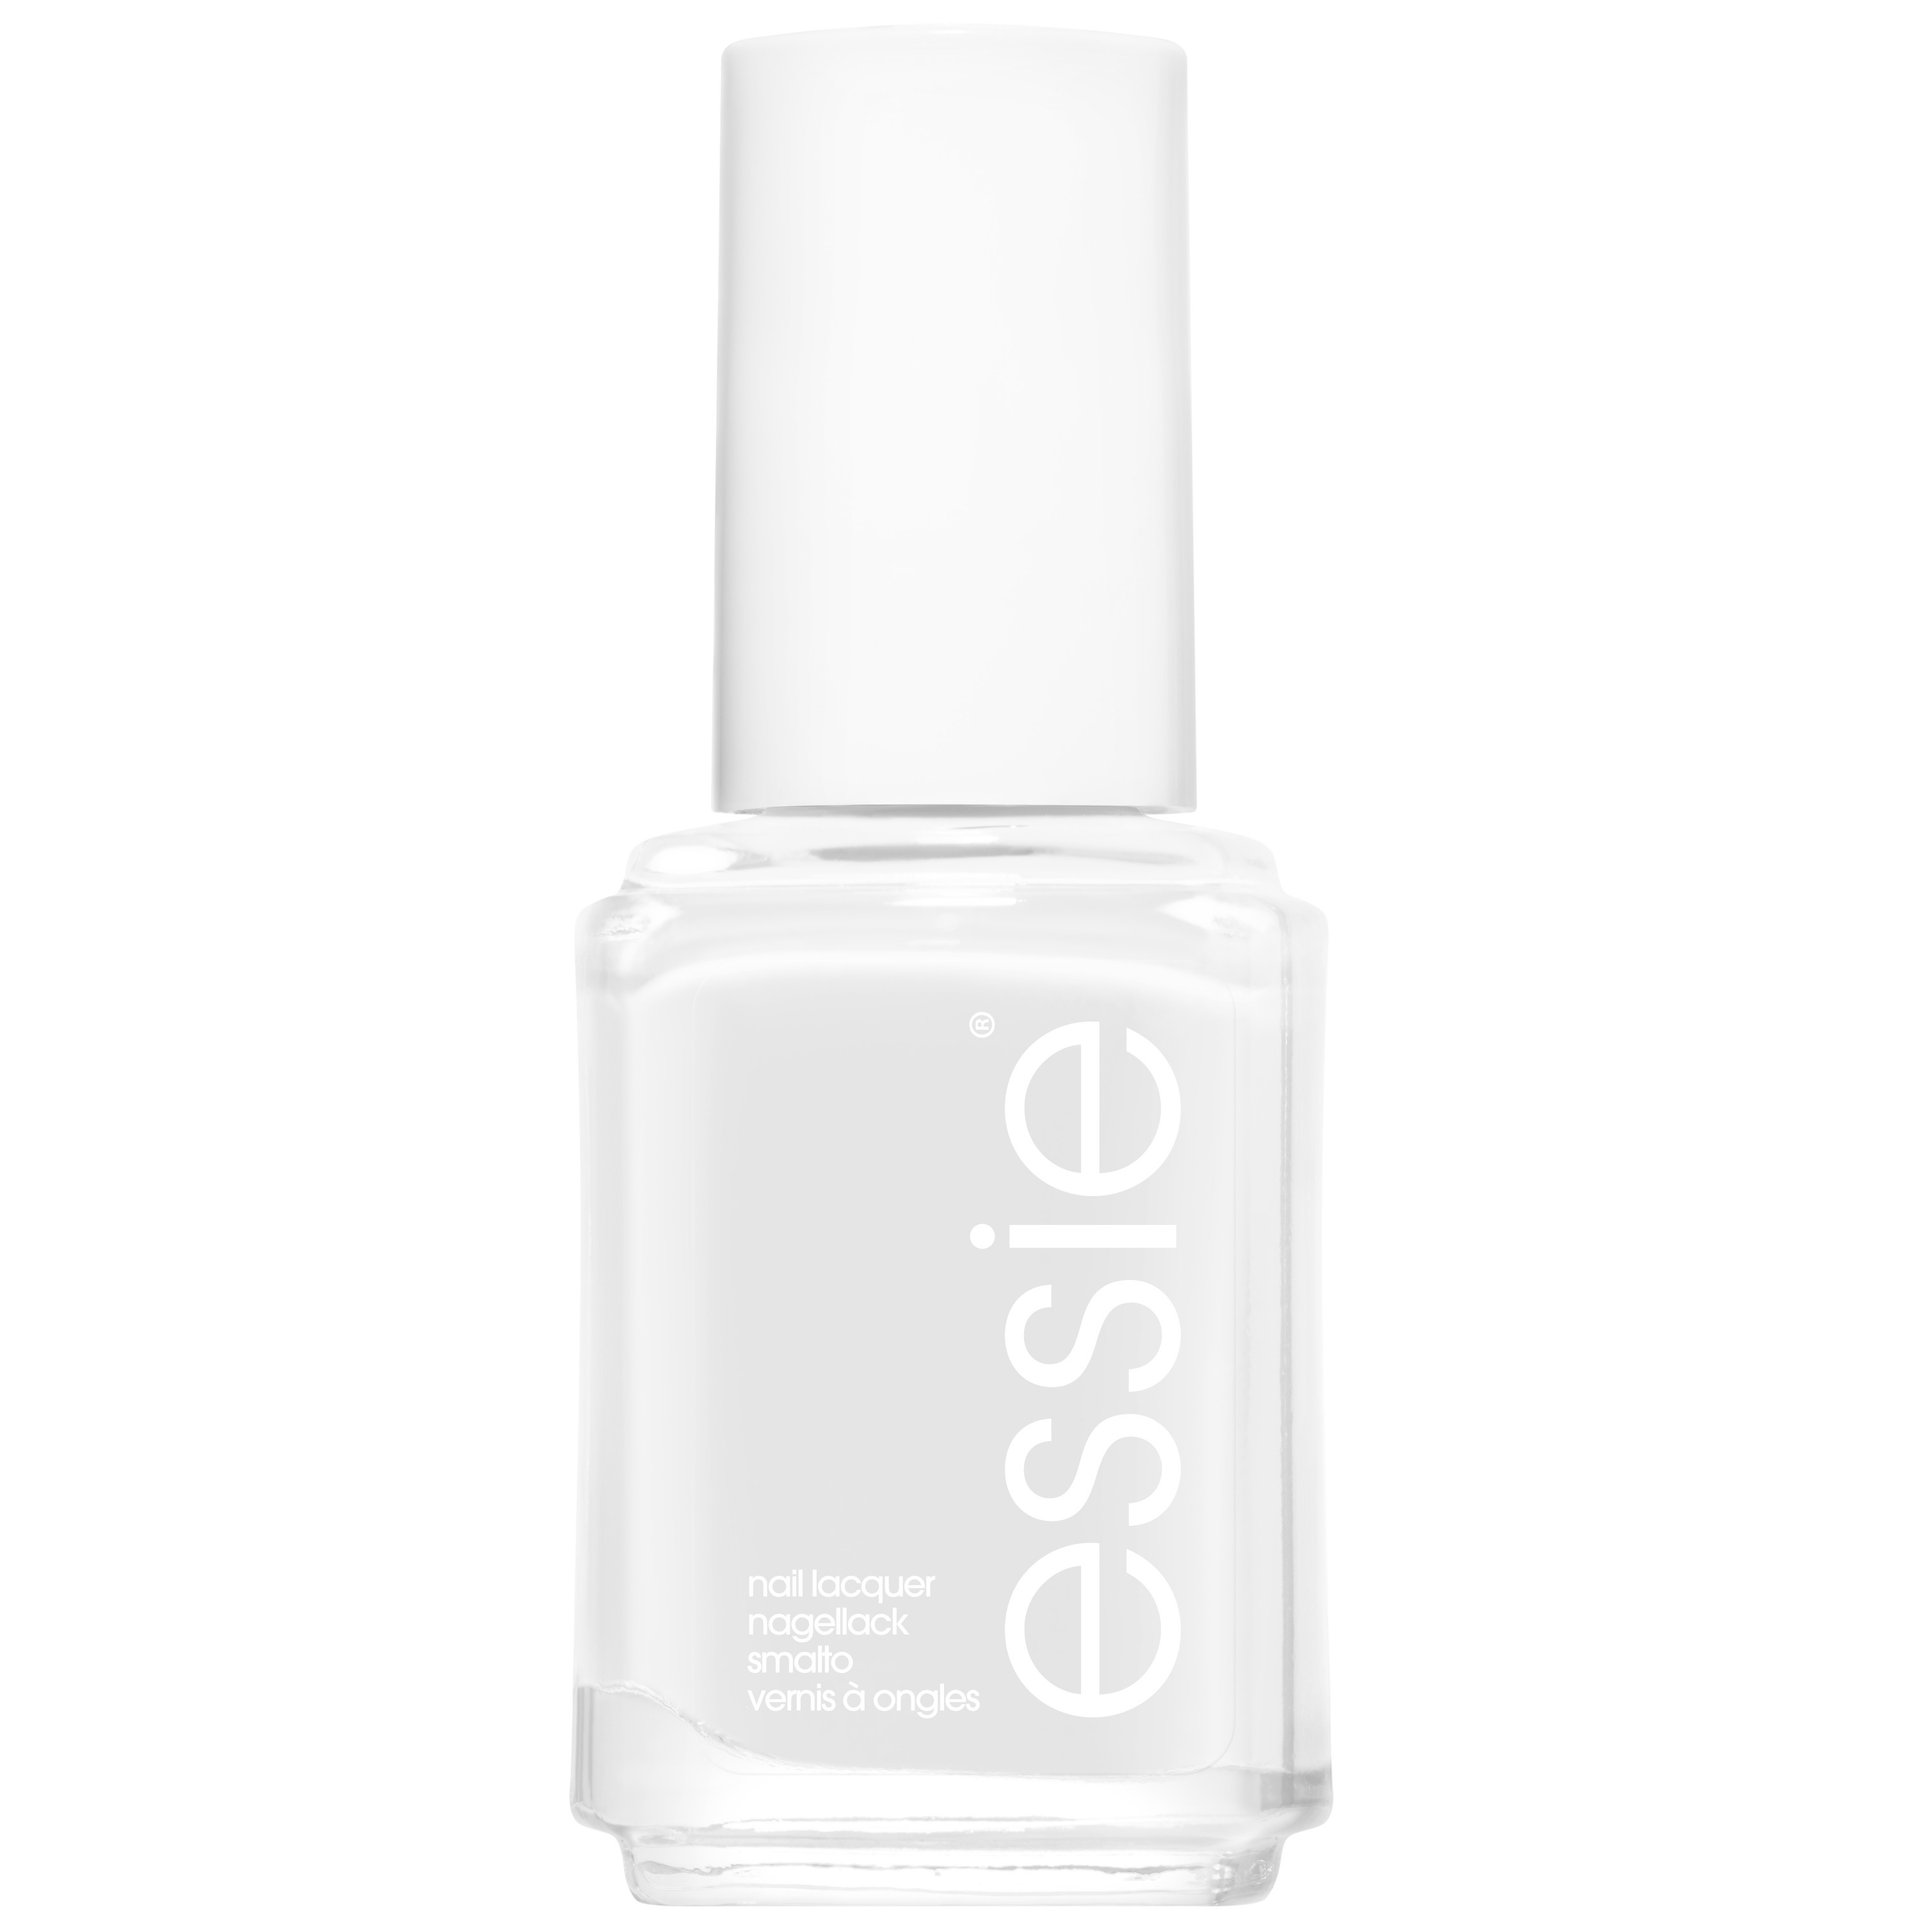 blanc - white french manicure enamel nail polish - essie uk